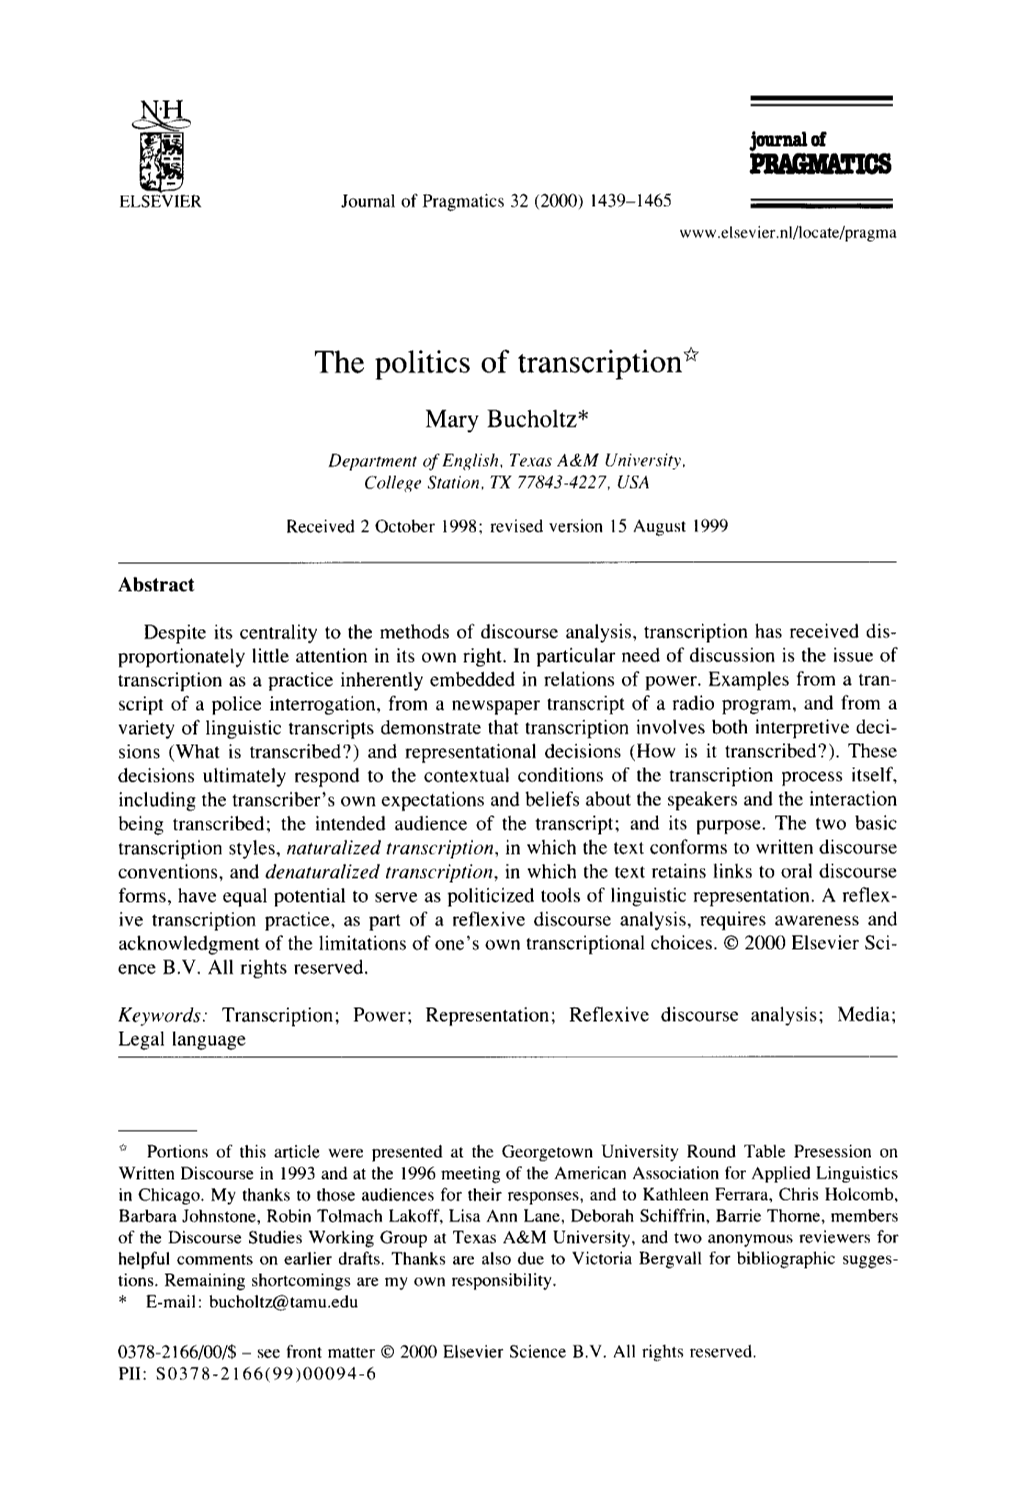 The Politics of Transcription